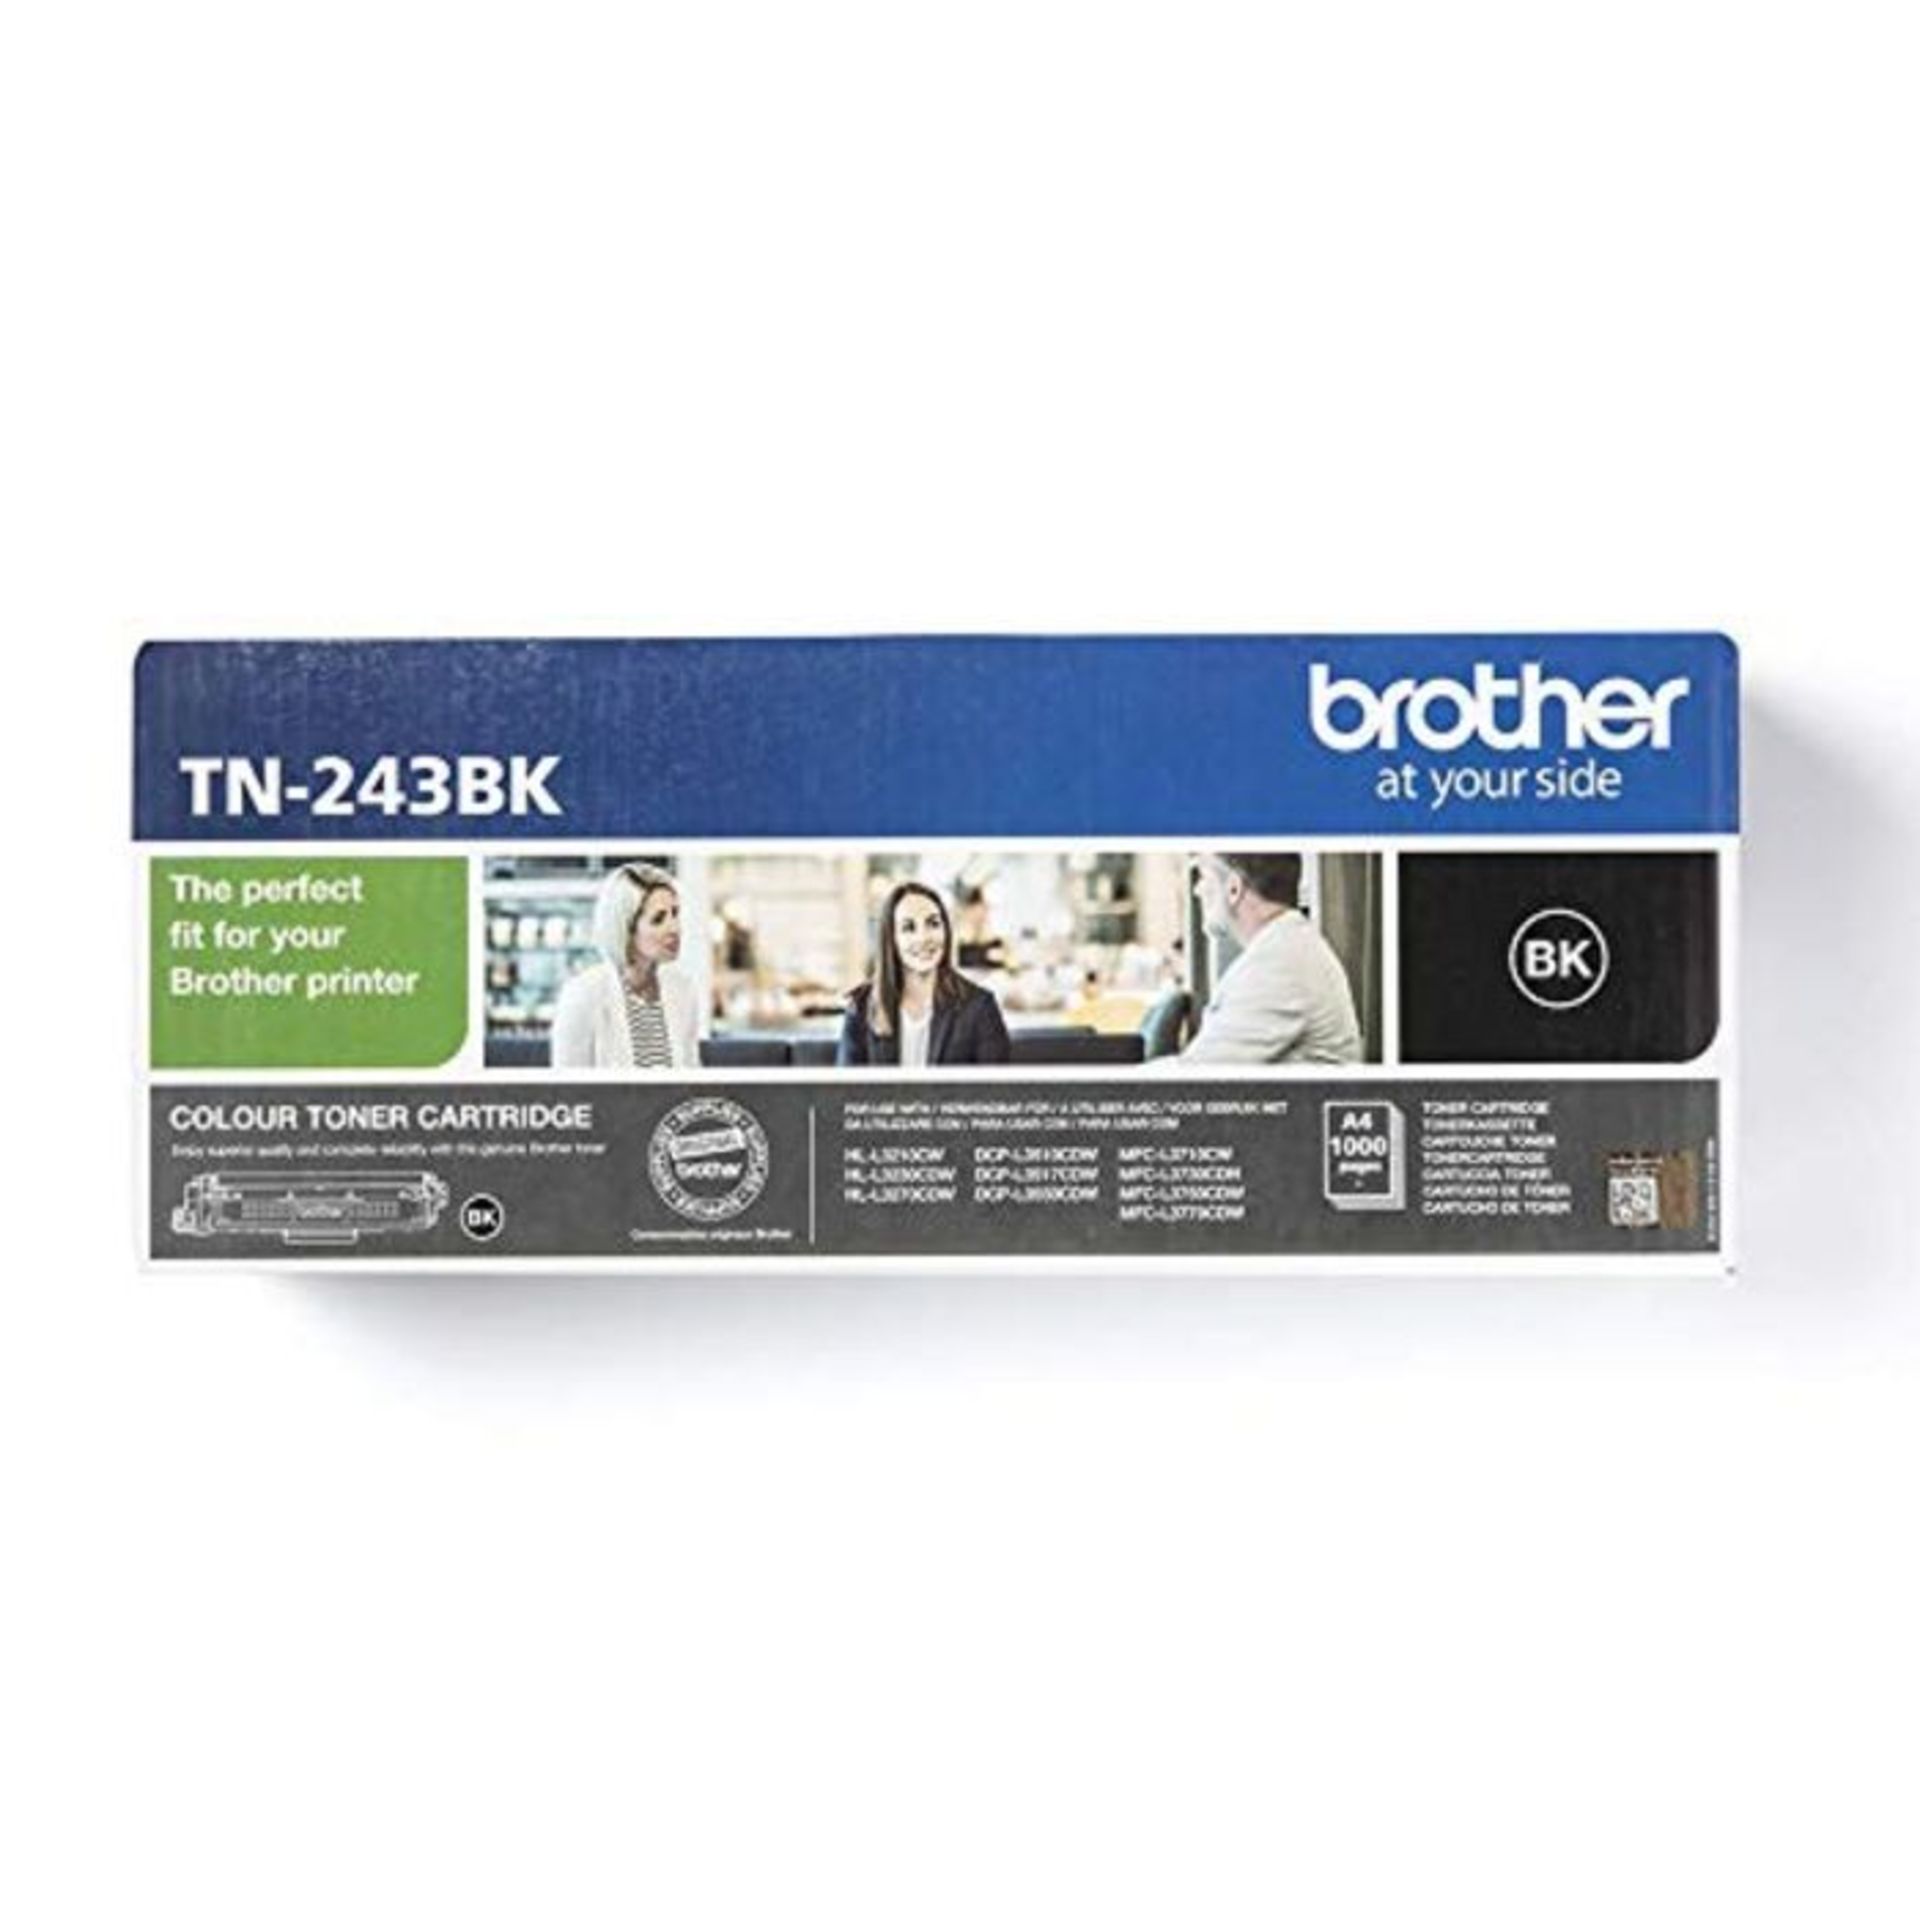 Brother TN-243BK Toner Cartridge, Black, Single Pack, Standard Yield, Includes 1 x Ton